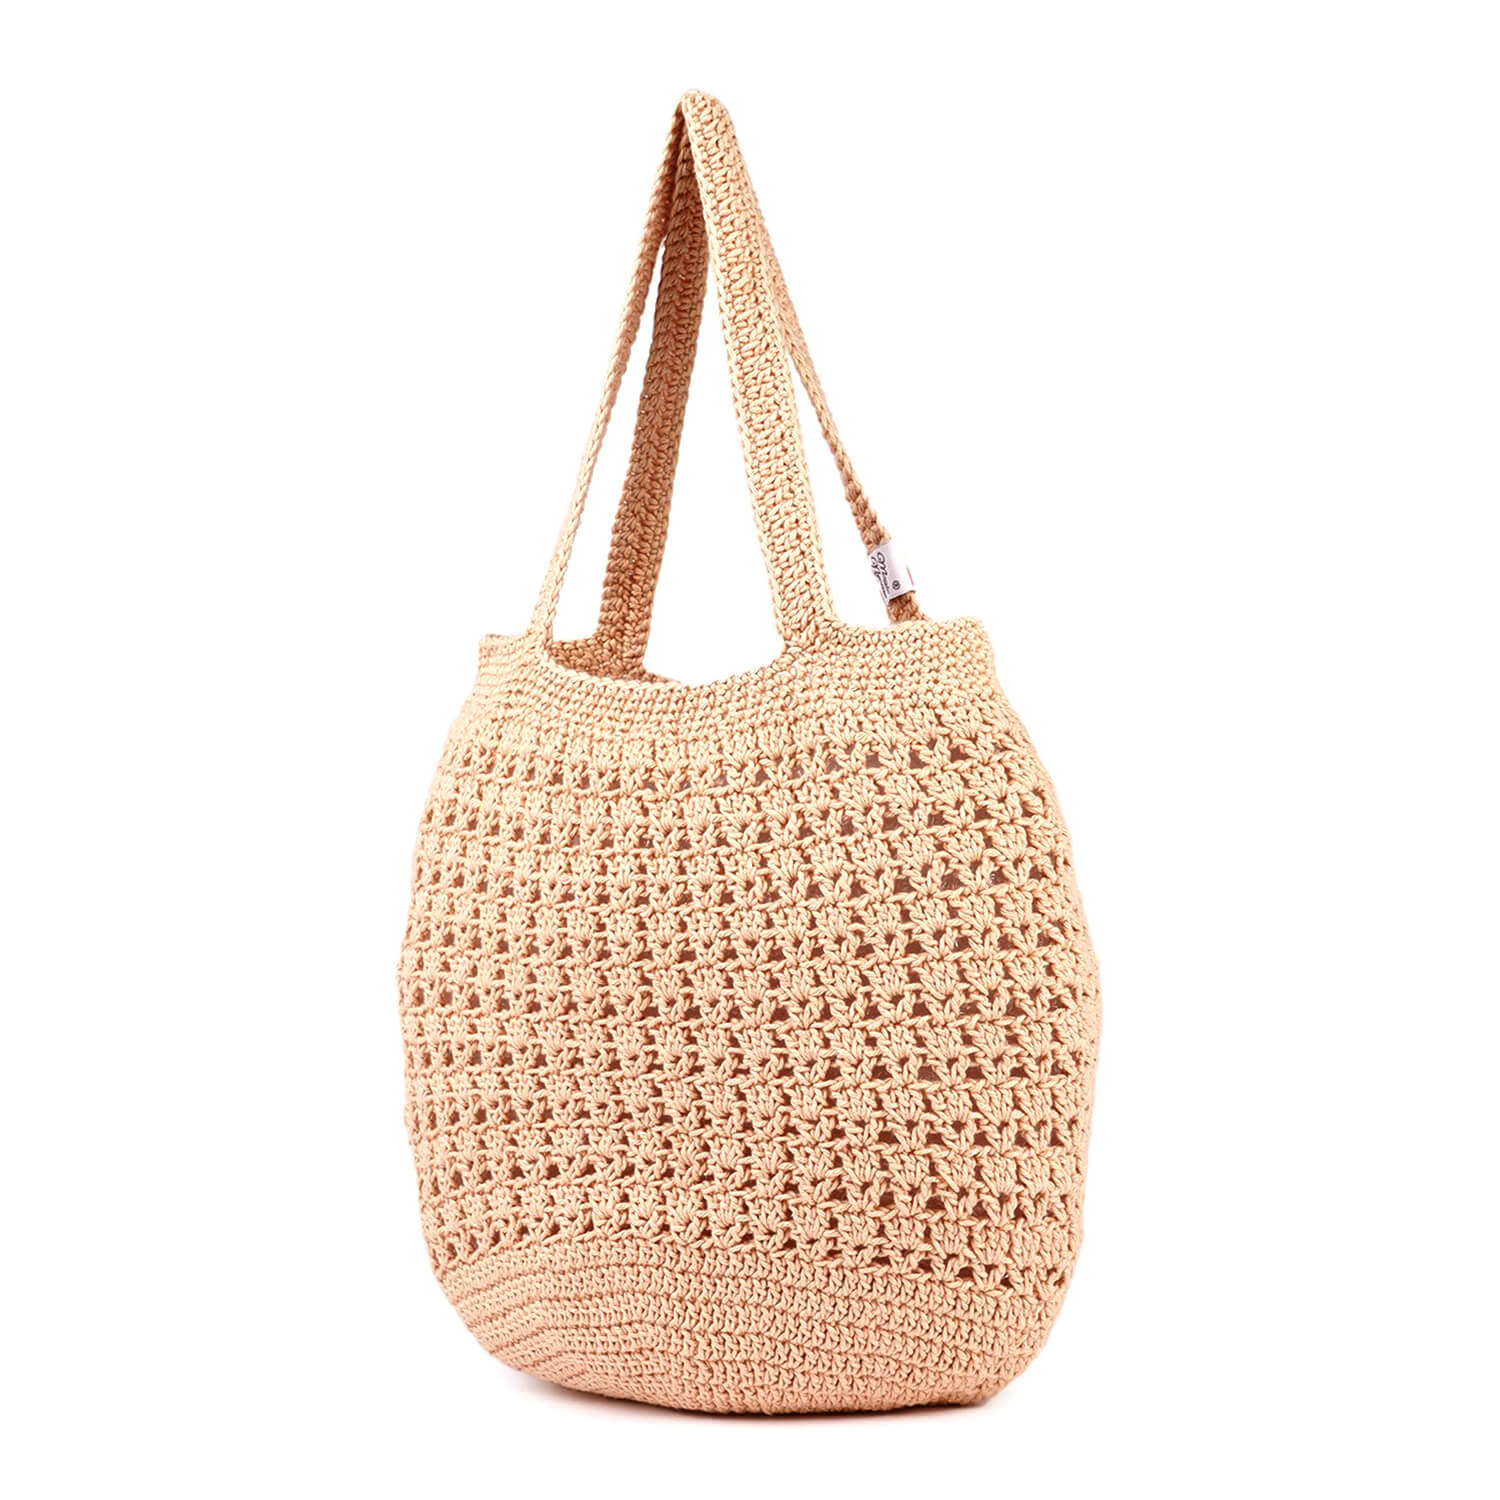 Handmade Crochet Market Bag - Beige 2668